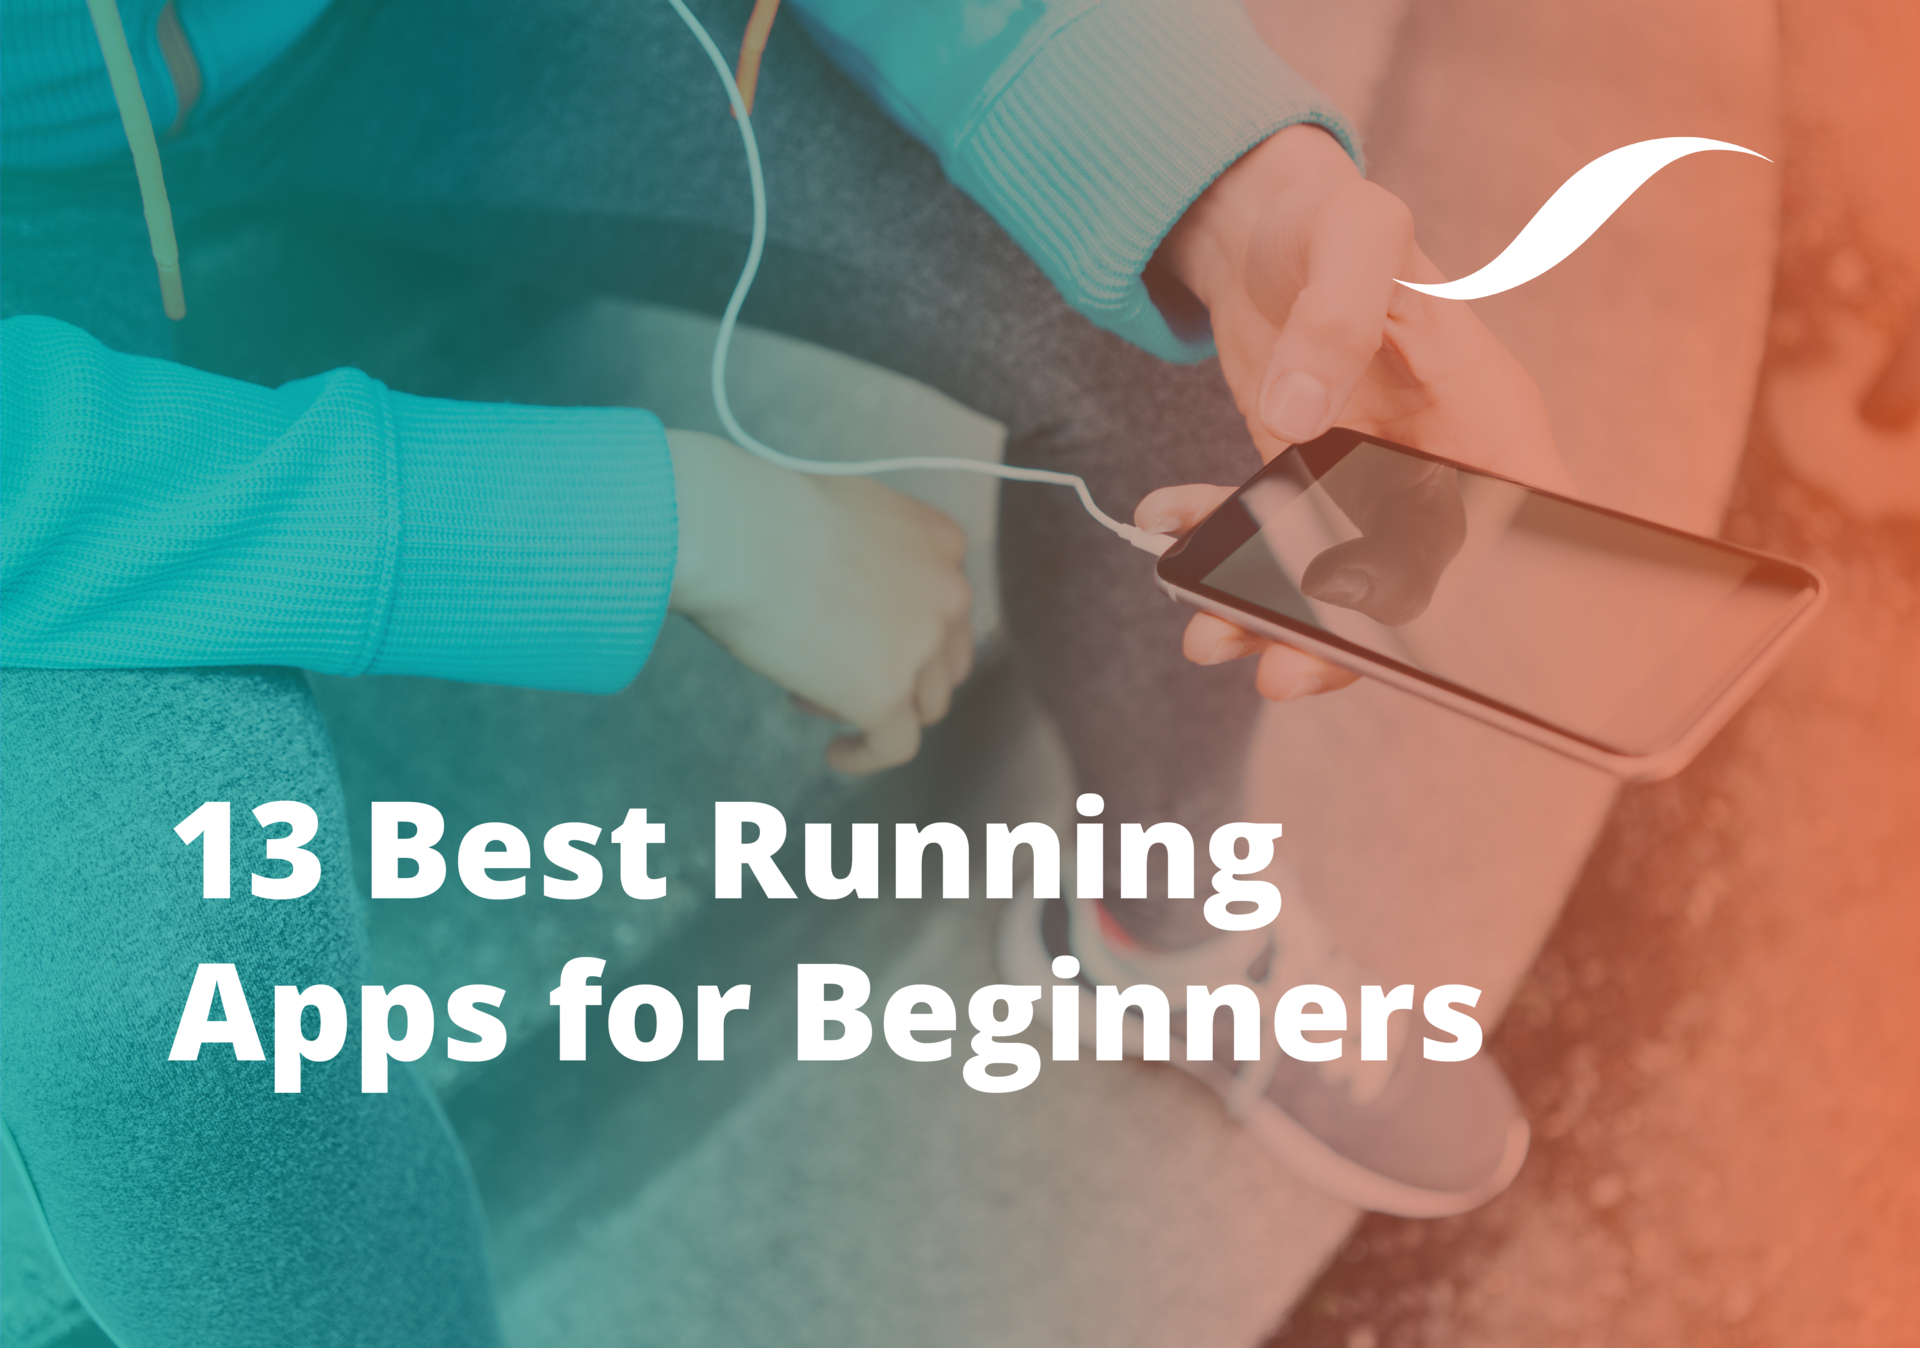 15 Best Pictures Best Running Training App Free / 10 Best Running Apps For Android Android Authority